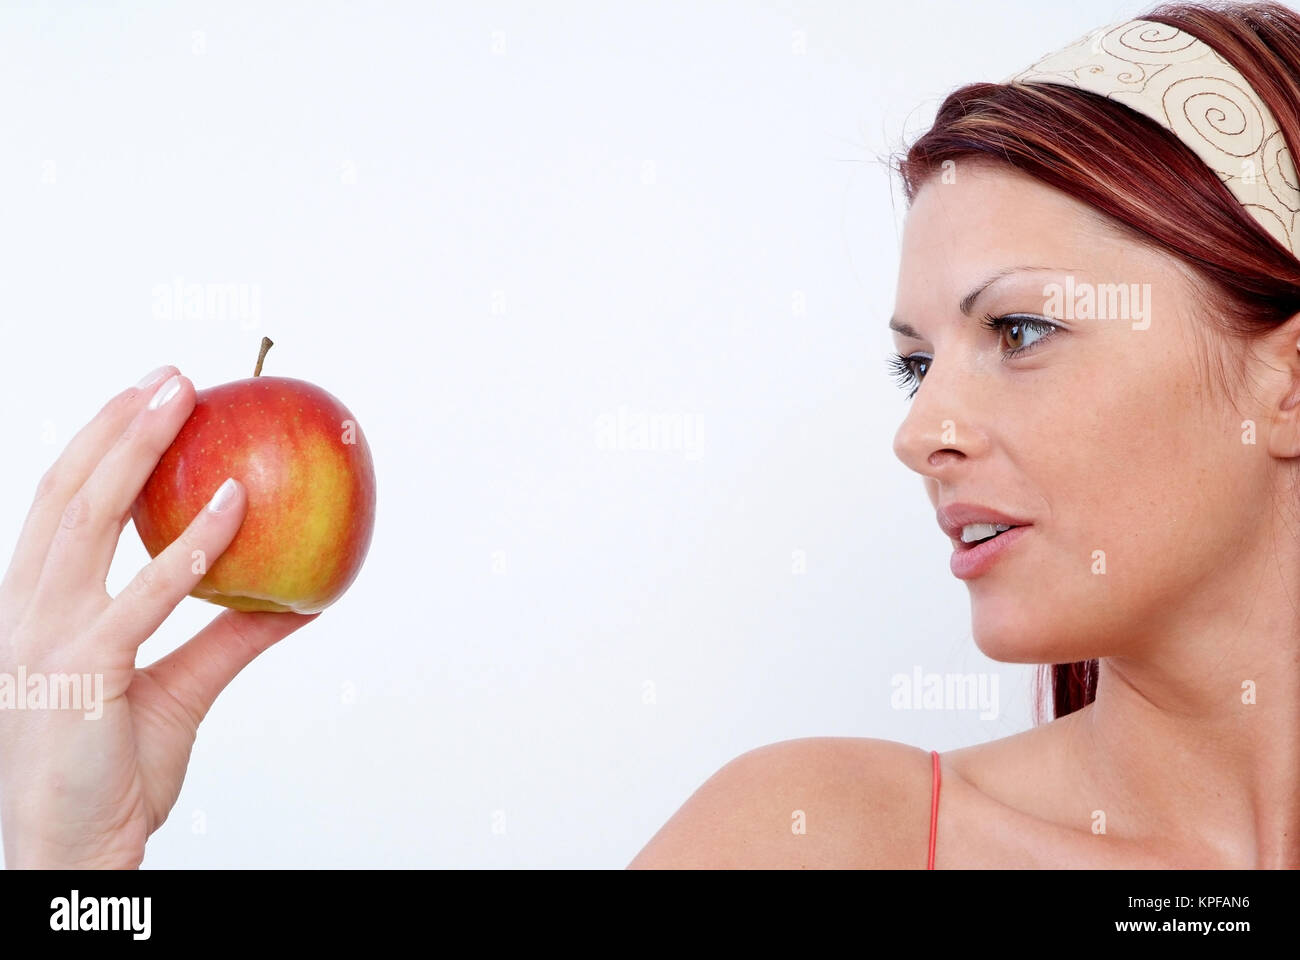 Junge Frau Mit Apfel in der Hand - Frau mit Apfel Stockfoto